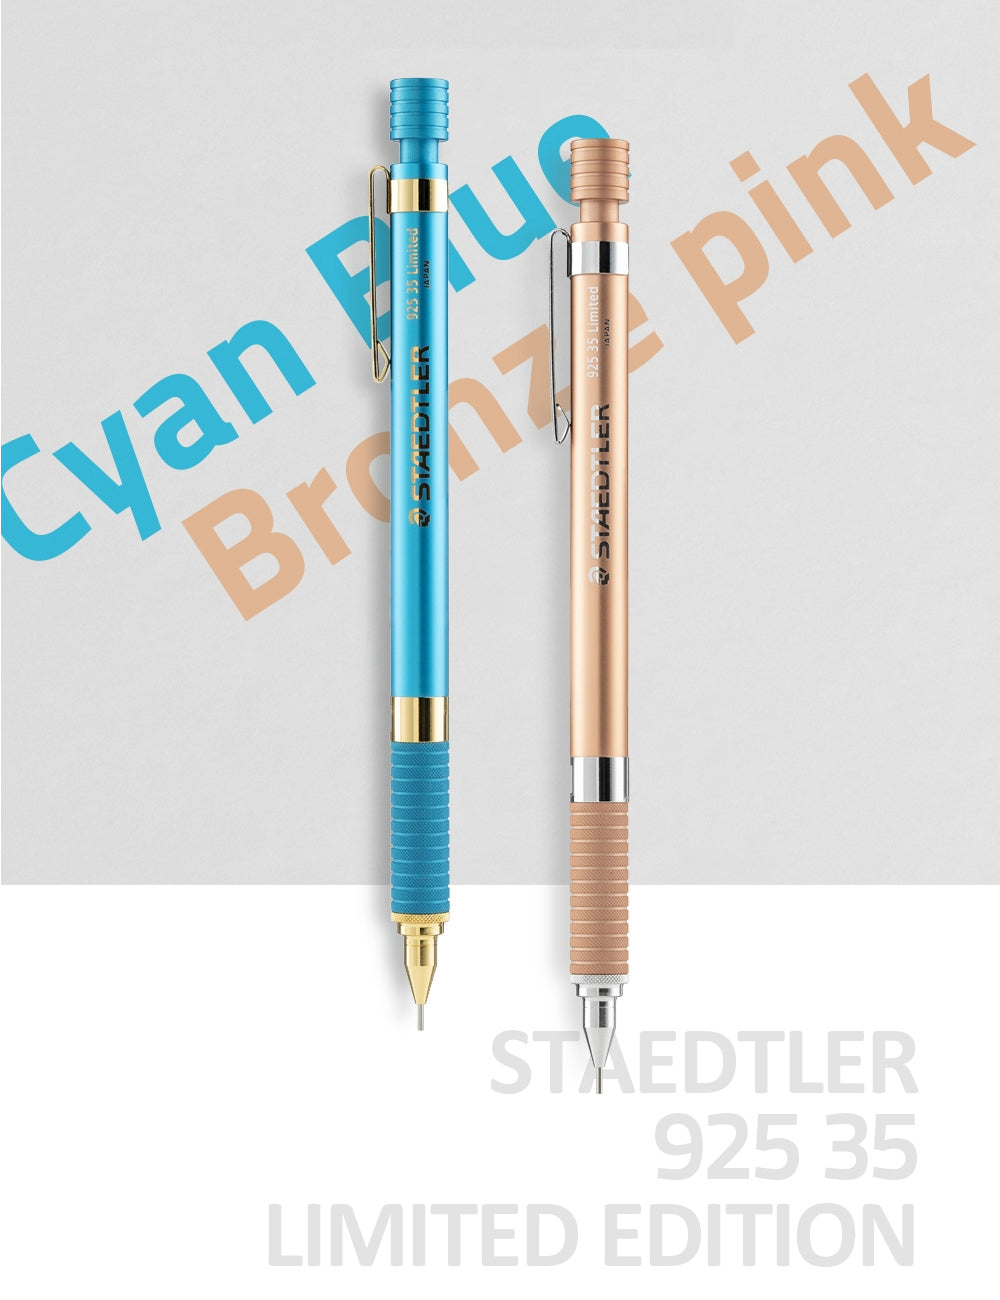 German STAEDTLER All-metal Mechanical Pencil 925 35 Black Gold